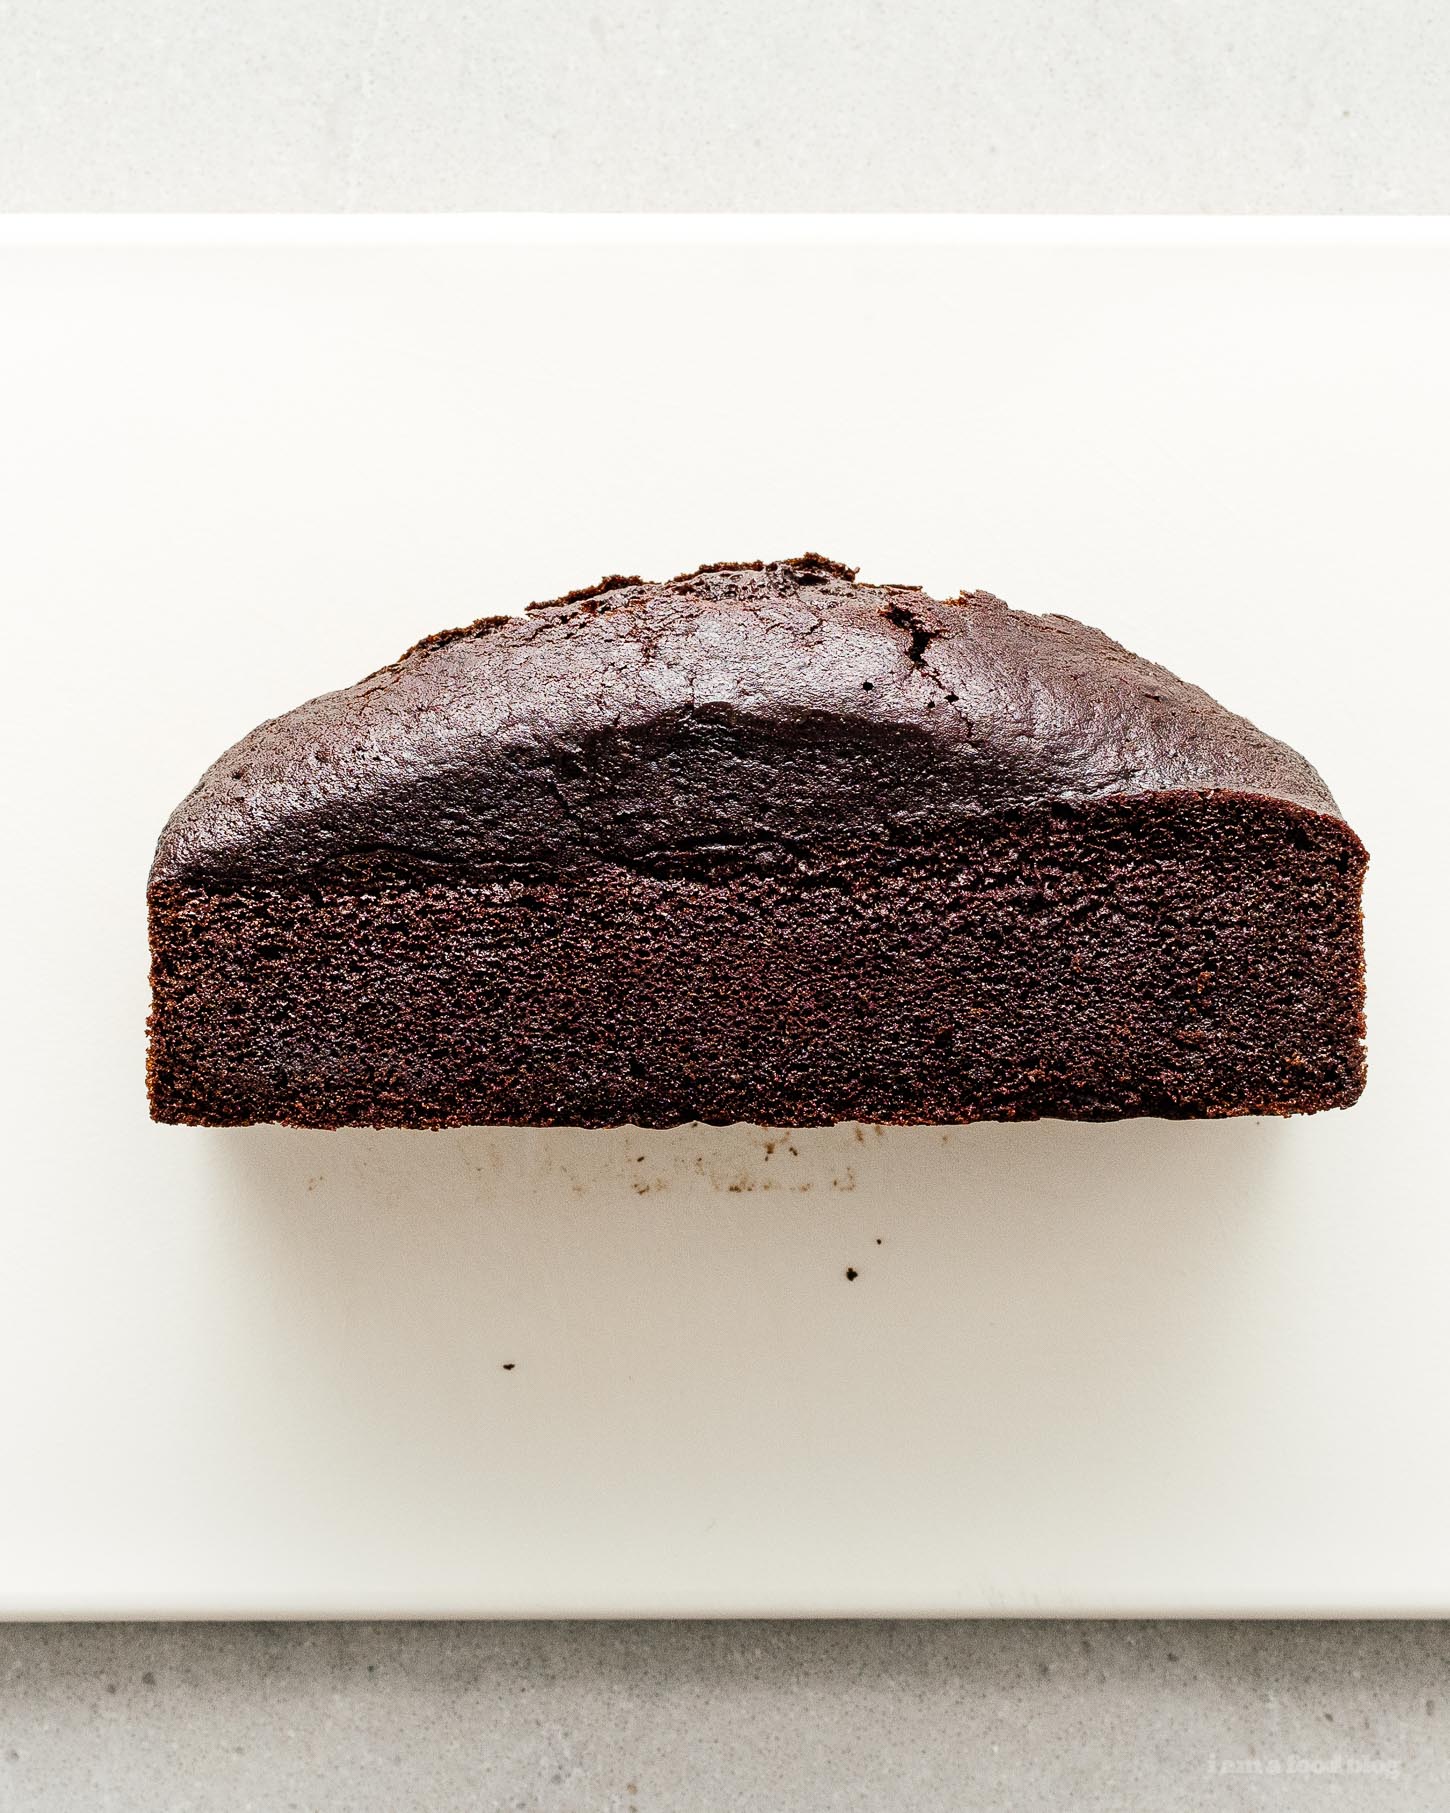 Mini Chocolate Loaf Cake Recipe | www.iamafoodblog.com